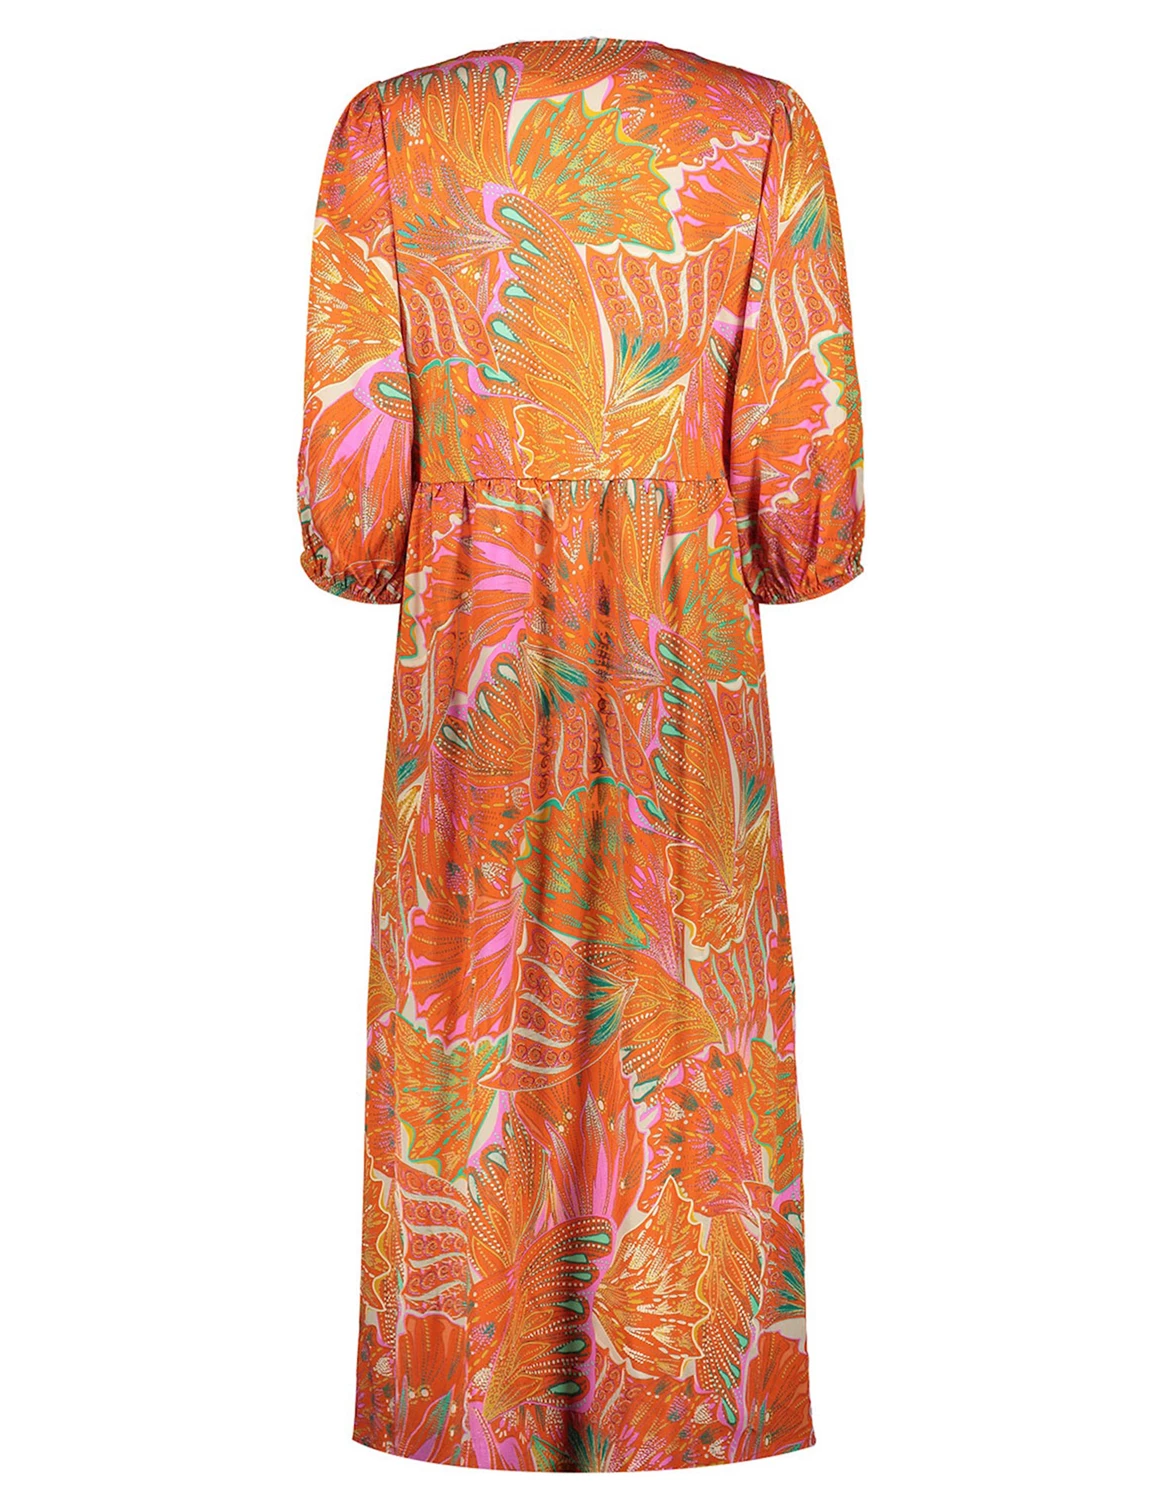 overschot Corporation rok Geisha Dress 37136-20 oranje kopen bij The Stone